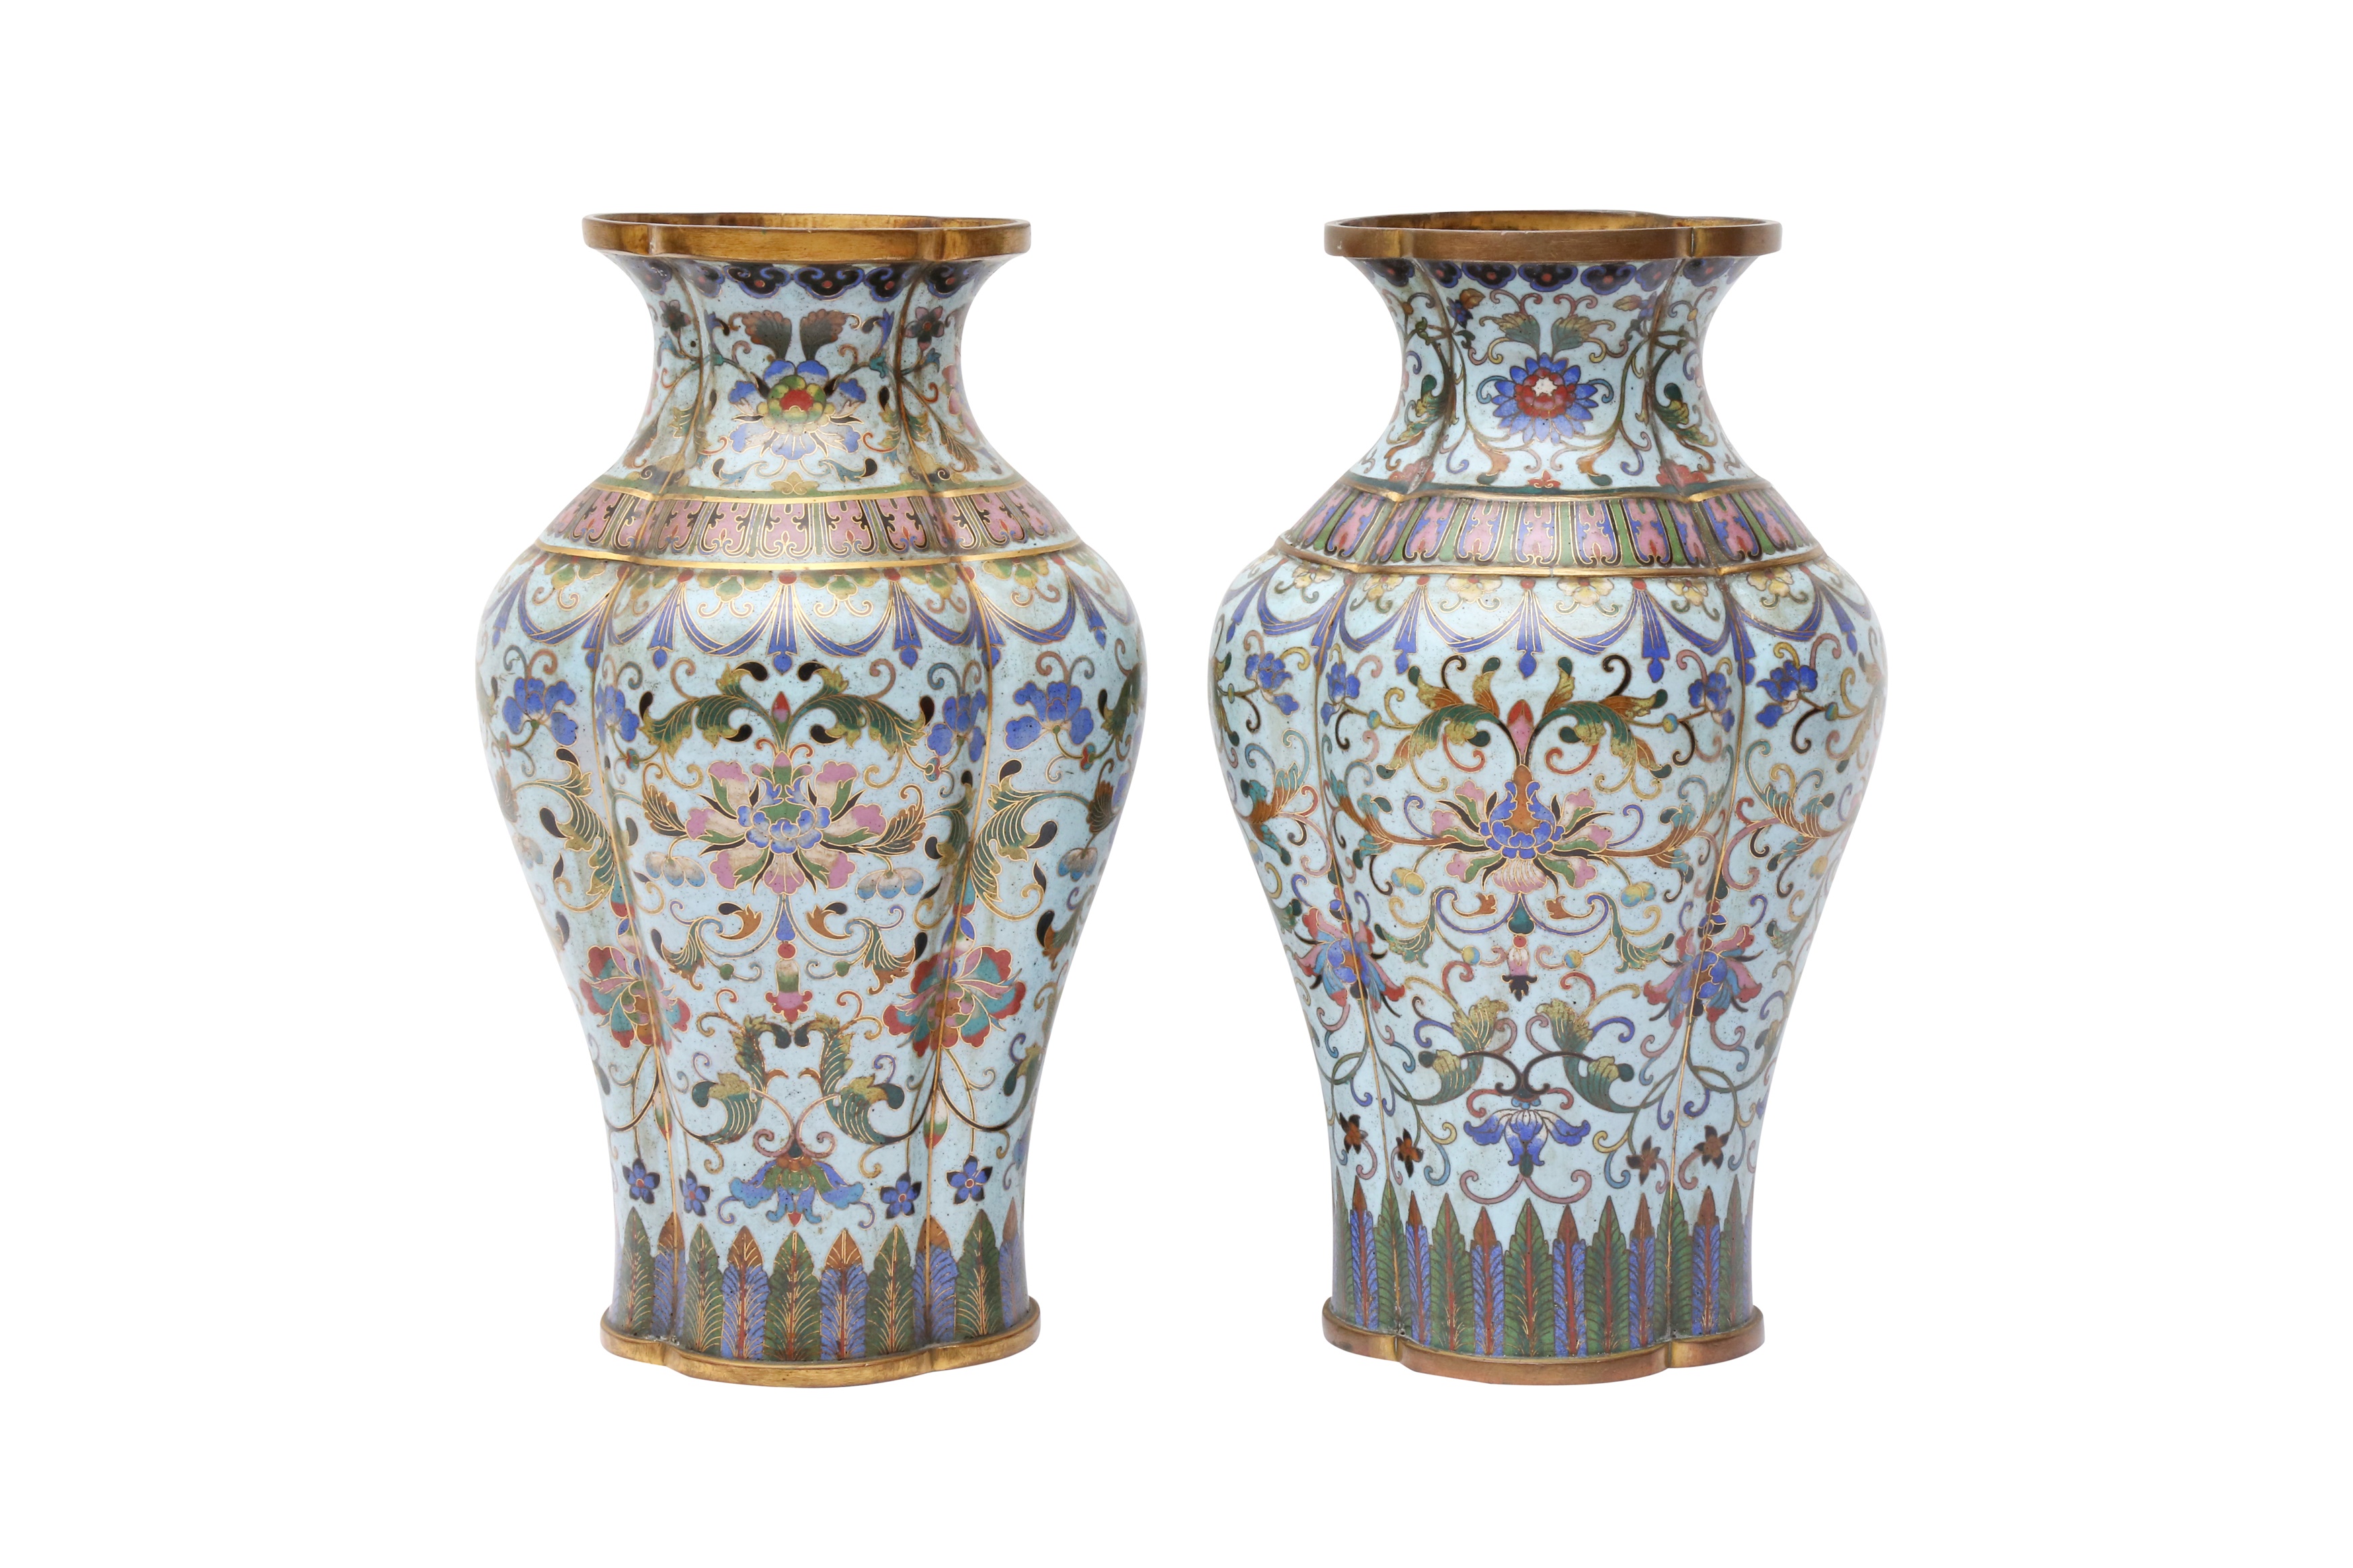 A PAIR OF CHINESE CLOISONNÉ ENAMEL VASES 清十八世紀 銅胎掐絲琺瑯番蓮紋瓶一對